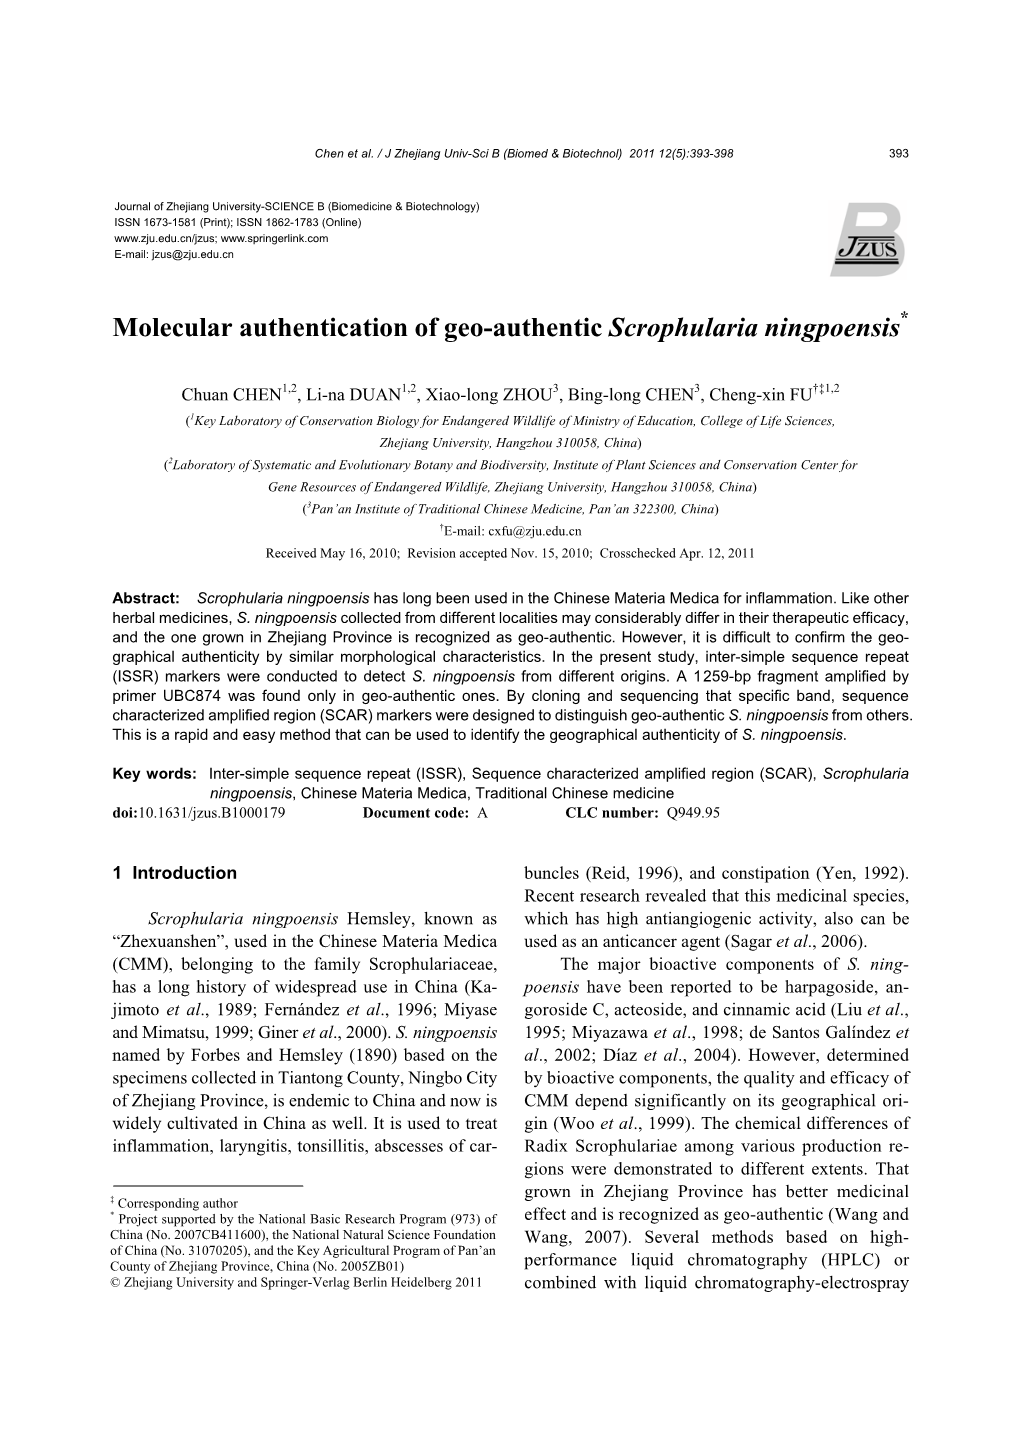 Molecular Authentication of Geo-Authentic Scrophularia Ningpoensis*